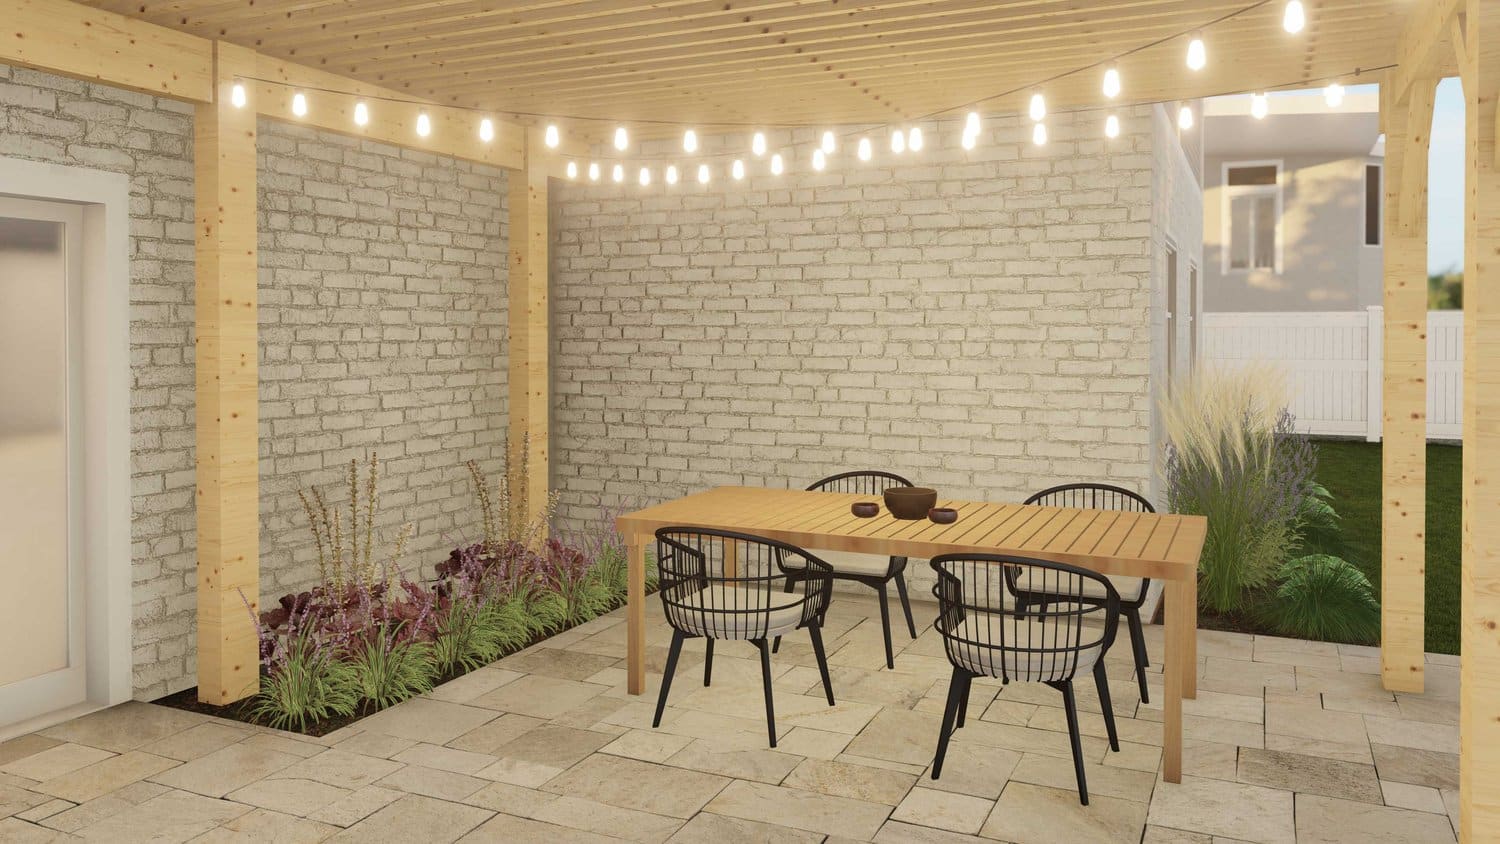 Potomac backyard patio design with hanging lights